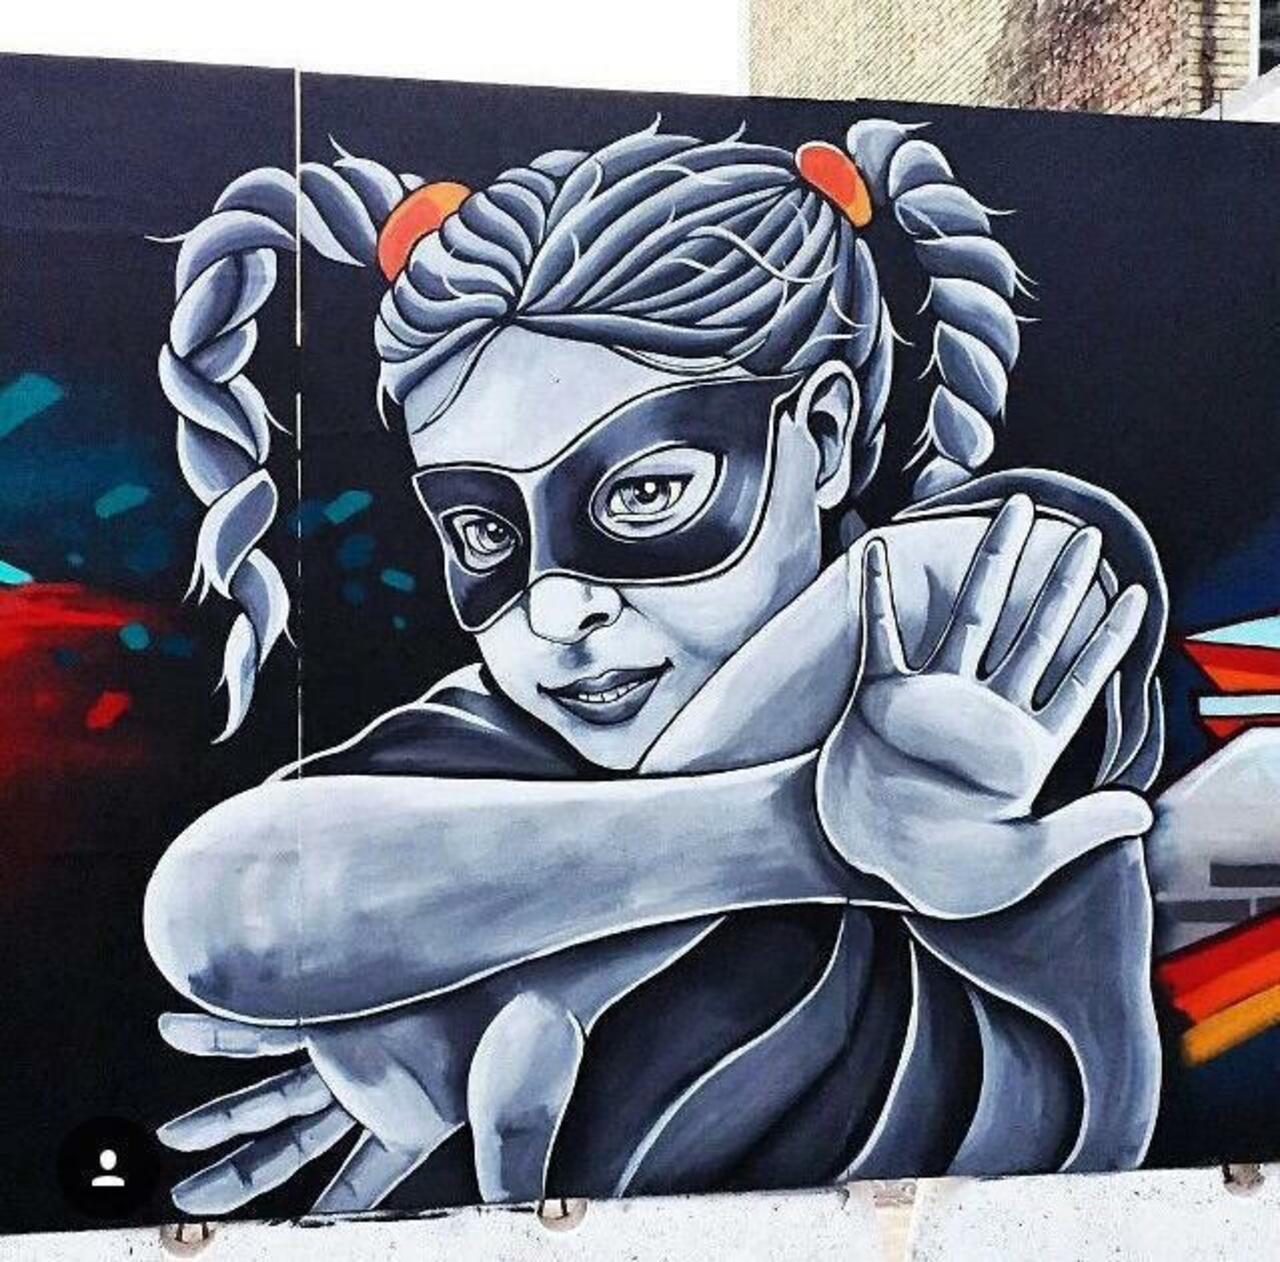 RT @AuKeats: #switch a wall into #Streetart by #Stinehvid #bedifferent #graffiti #arte #art http://t.co/gMqRiV6JbS